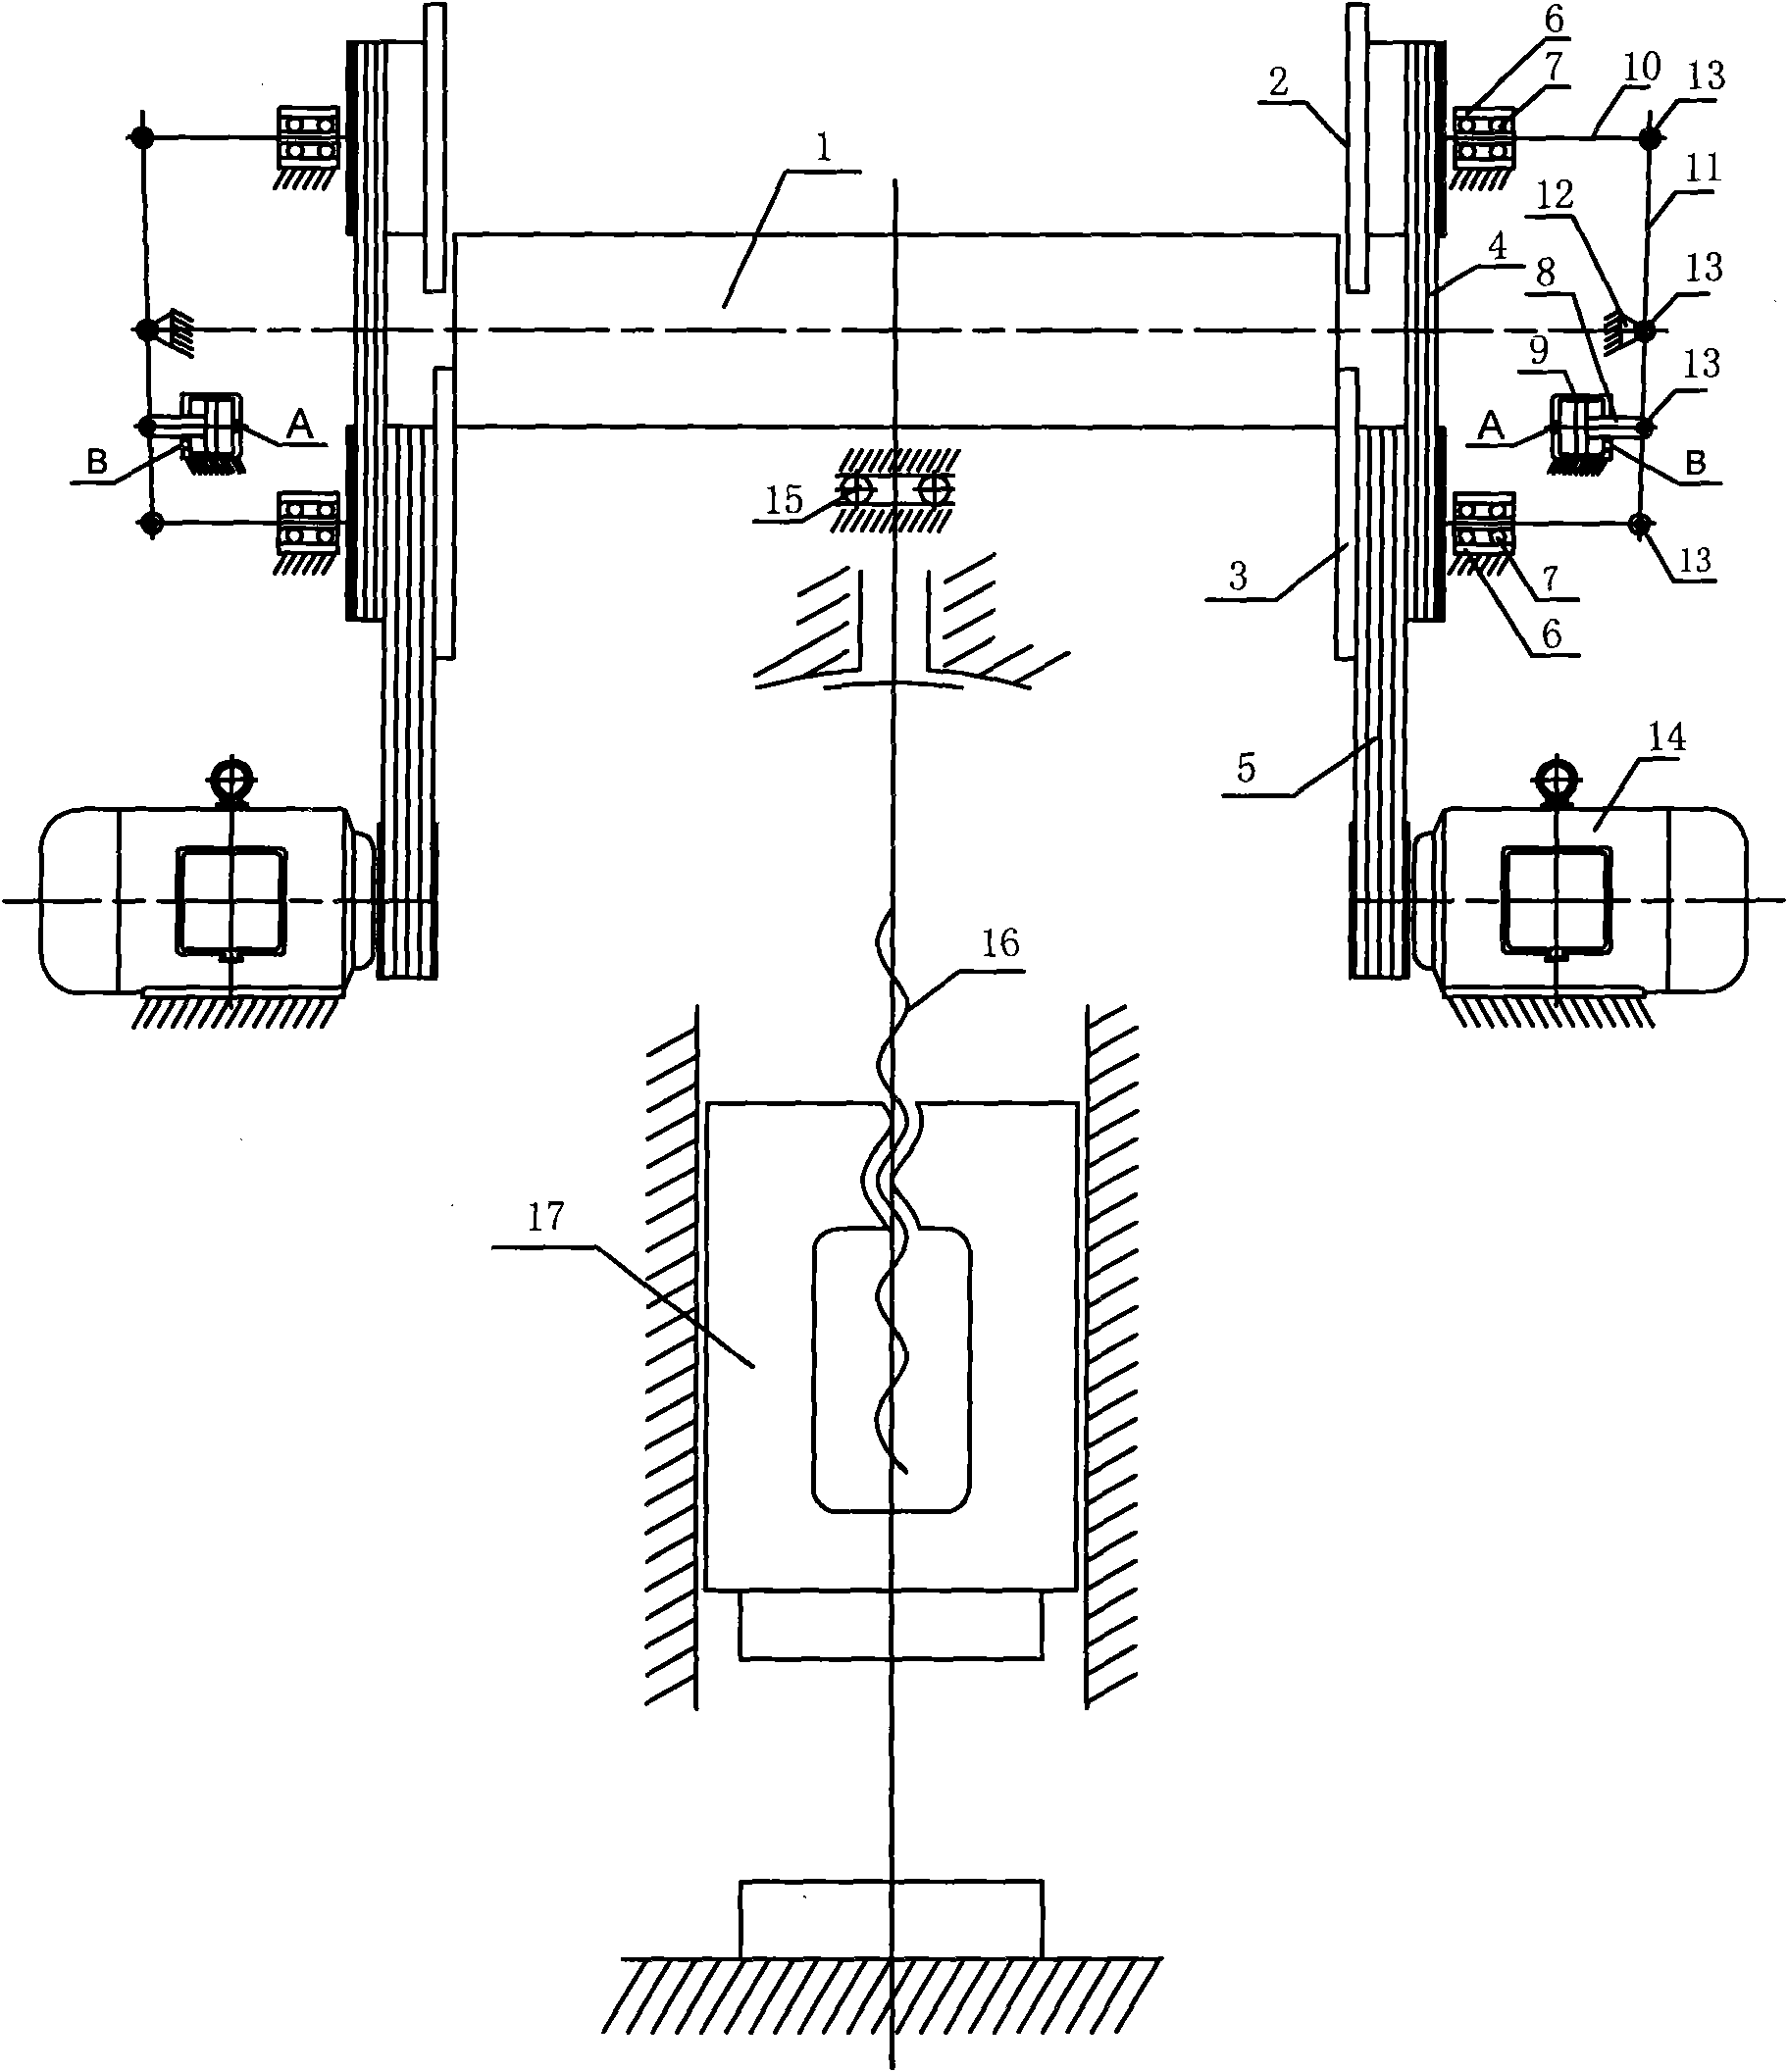 Four-wheel friction screw press